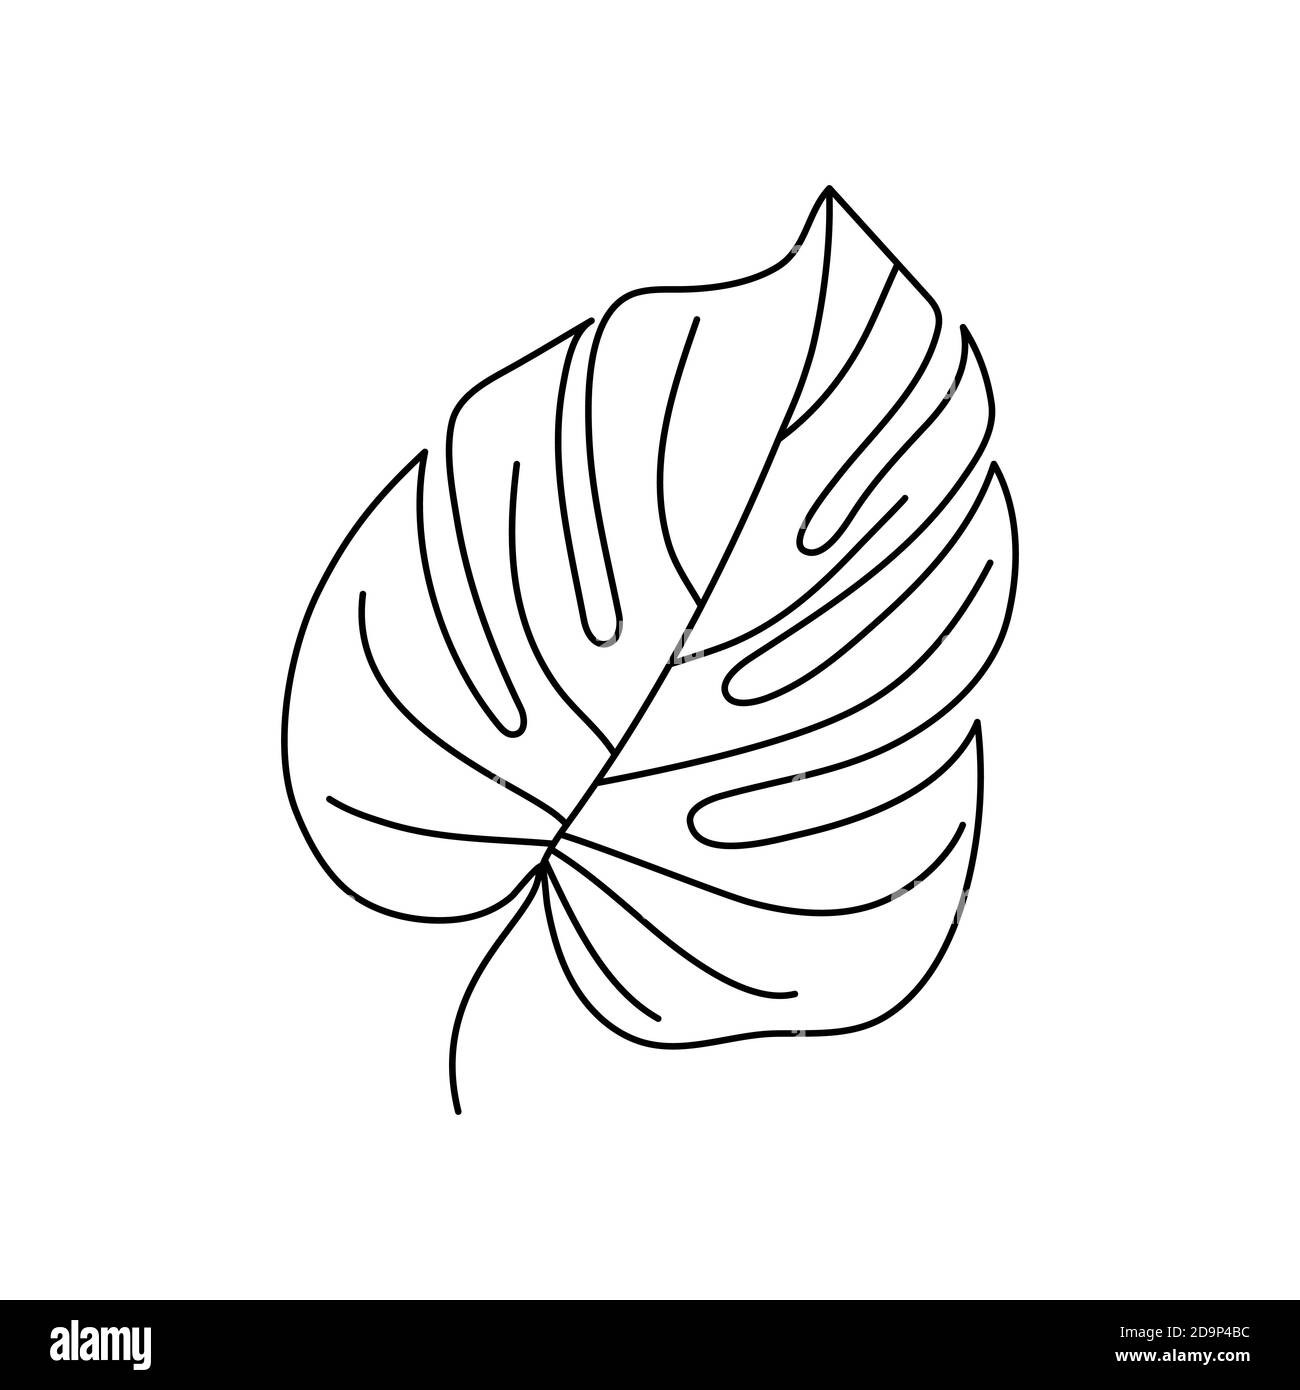 Tropical Leaf tumblr drawing 